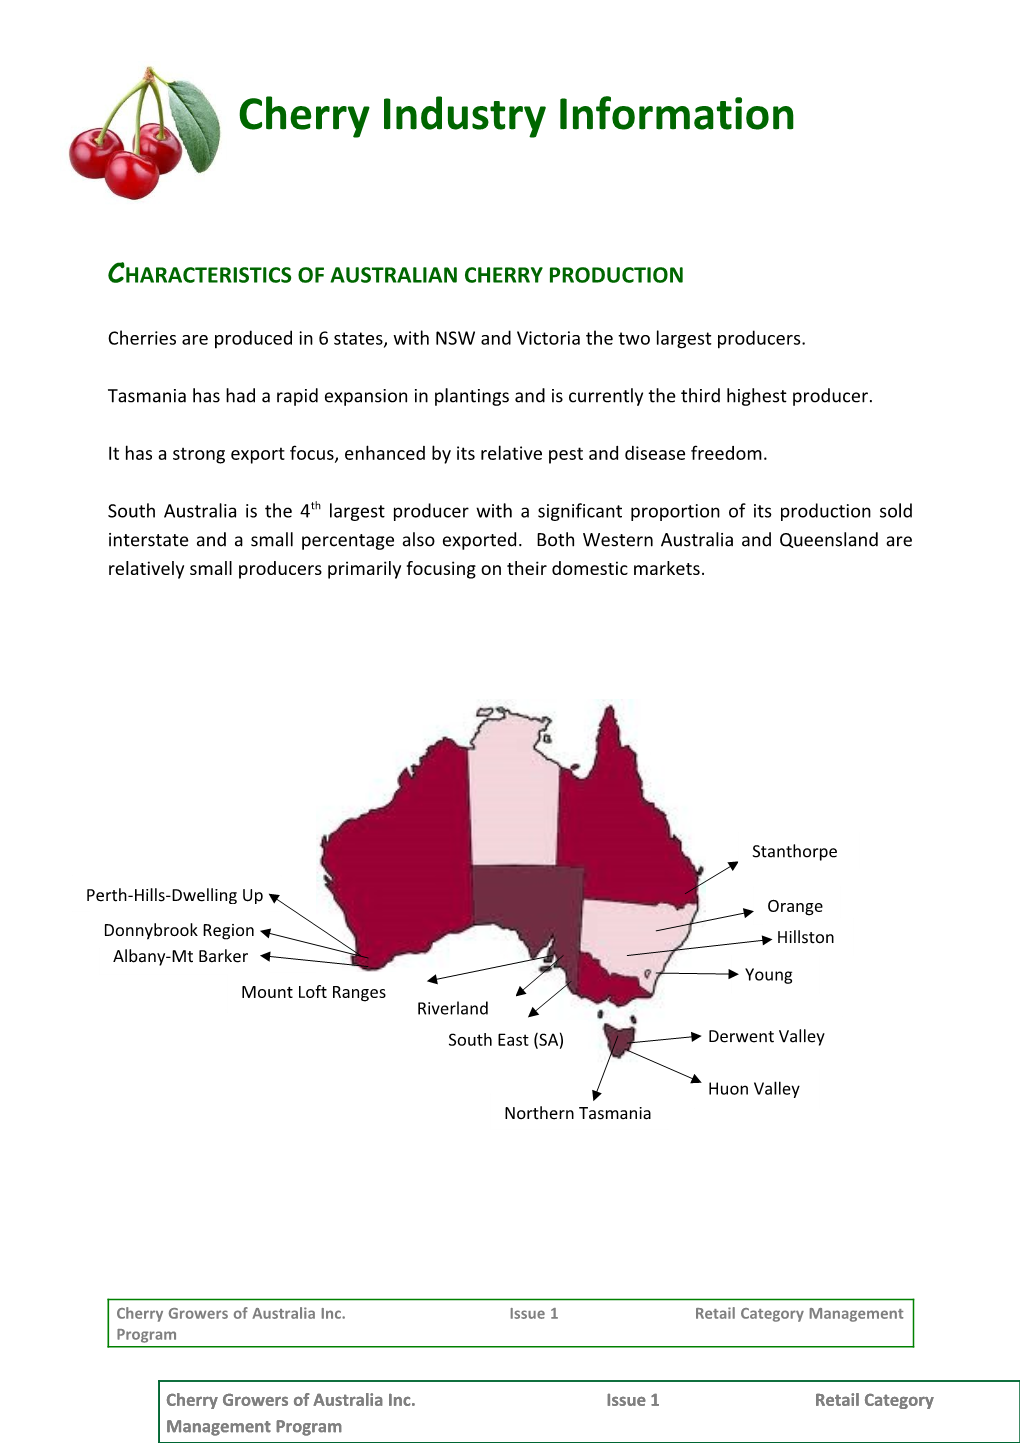 Characteristics of Australian Cherry Production